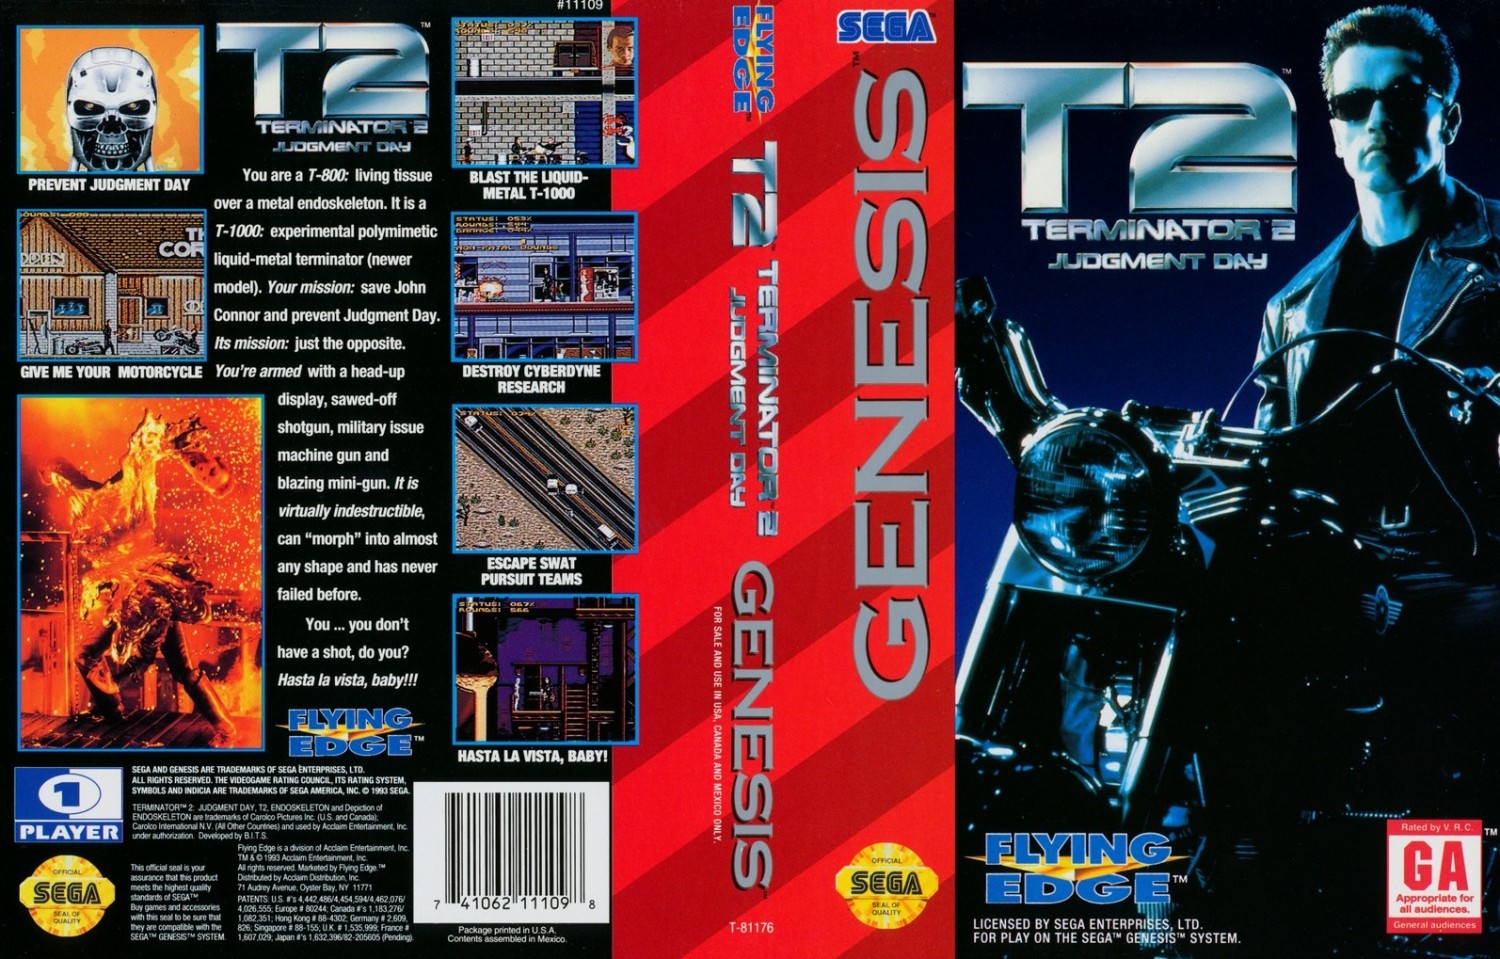 Terminator judgment day игра. Терминатор 2 сега обложка. Terminator 3 Sega картридж. Terminator 2 Sega картридж. Terminator 2 NES картридж.